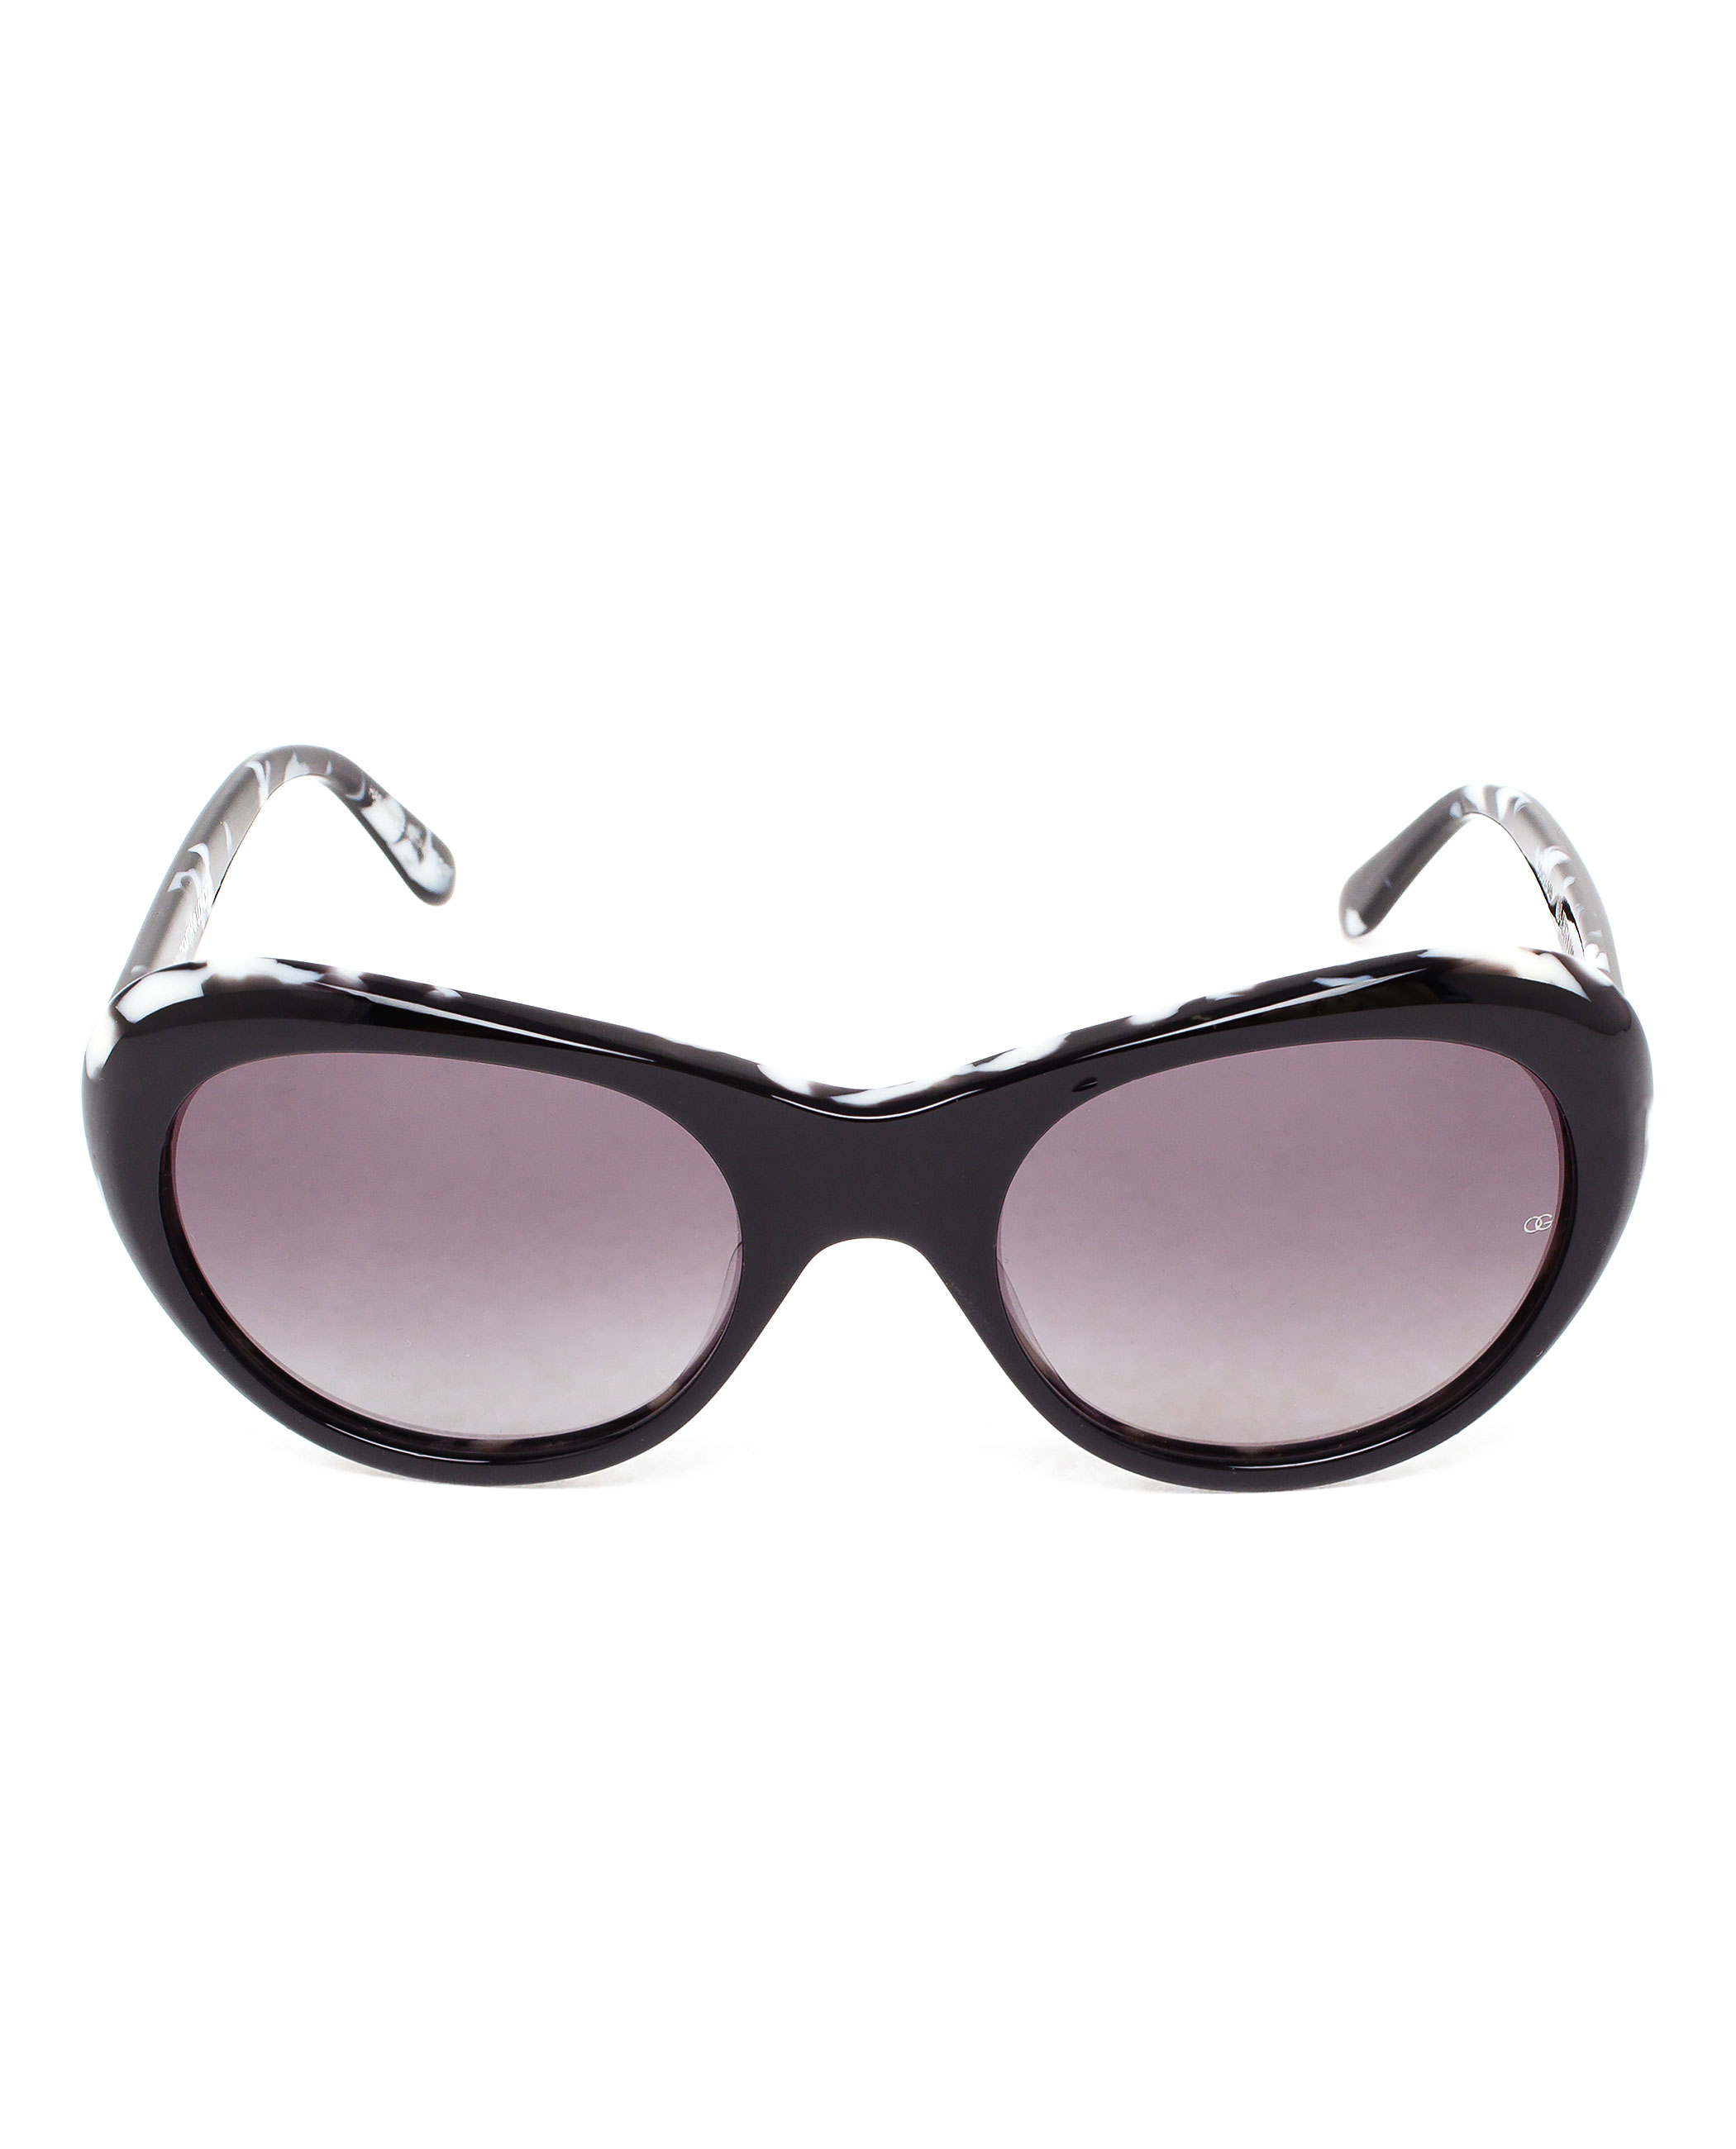 Oliver Goldsmith Majesty Sunglasses in Tortoise (Black) - Lyst